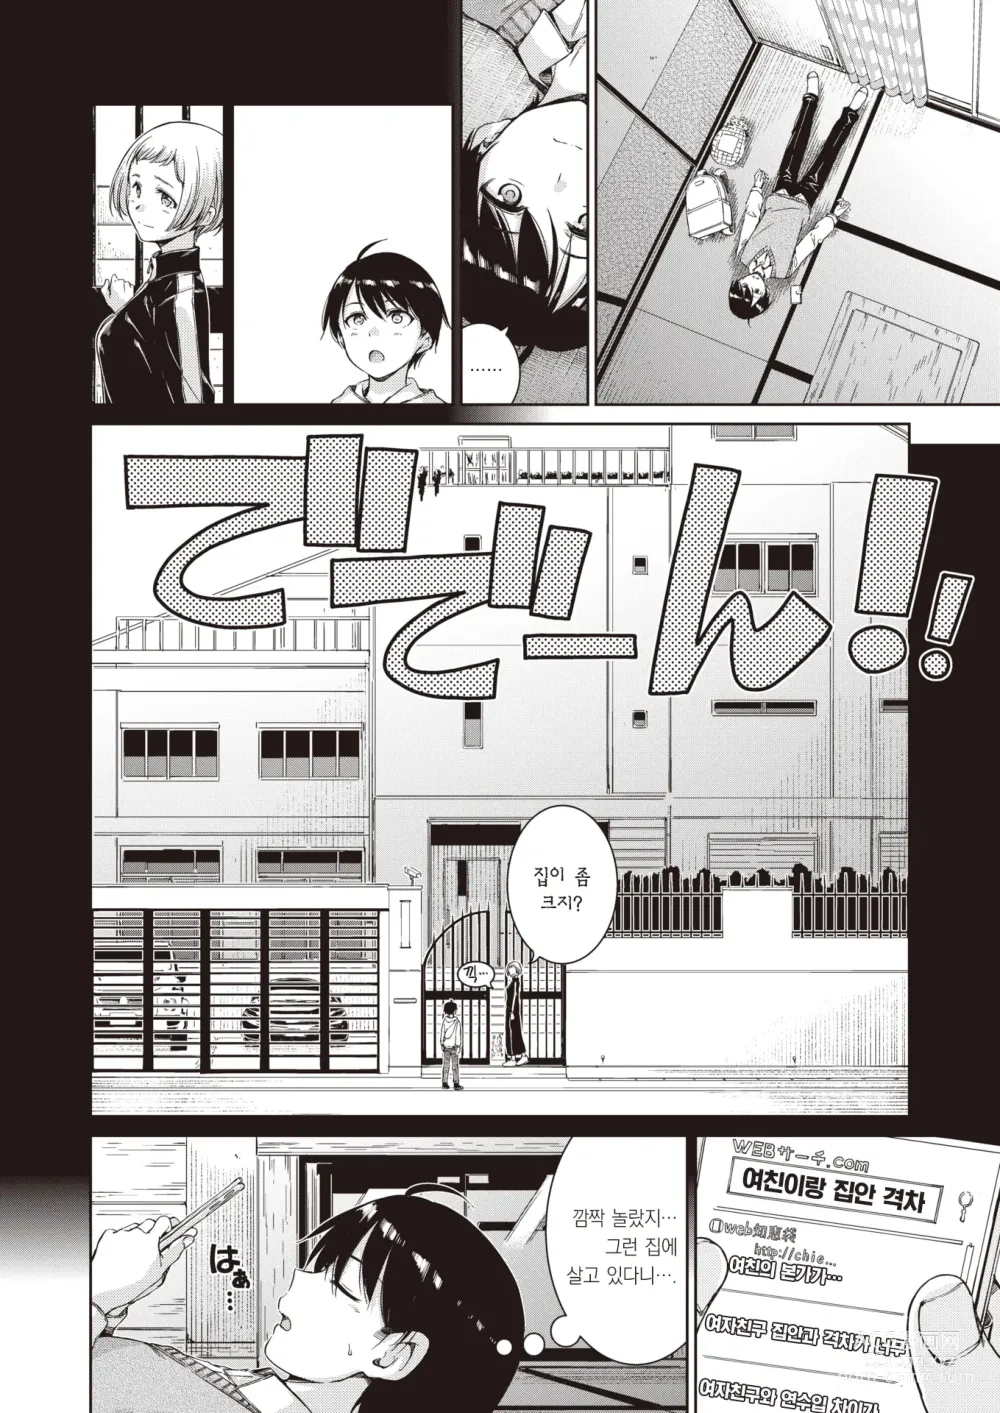 Page 3 of manga Near to You!!